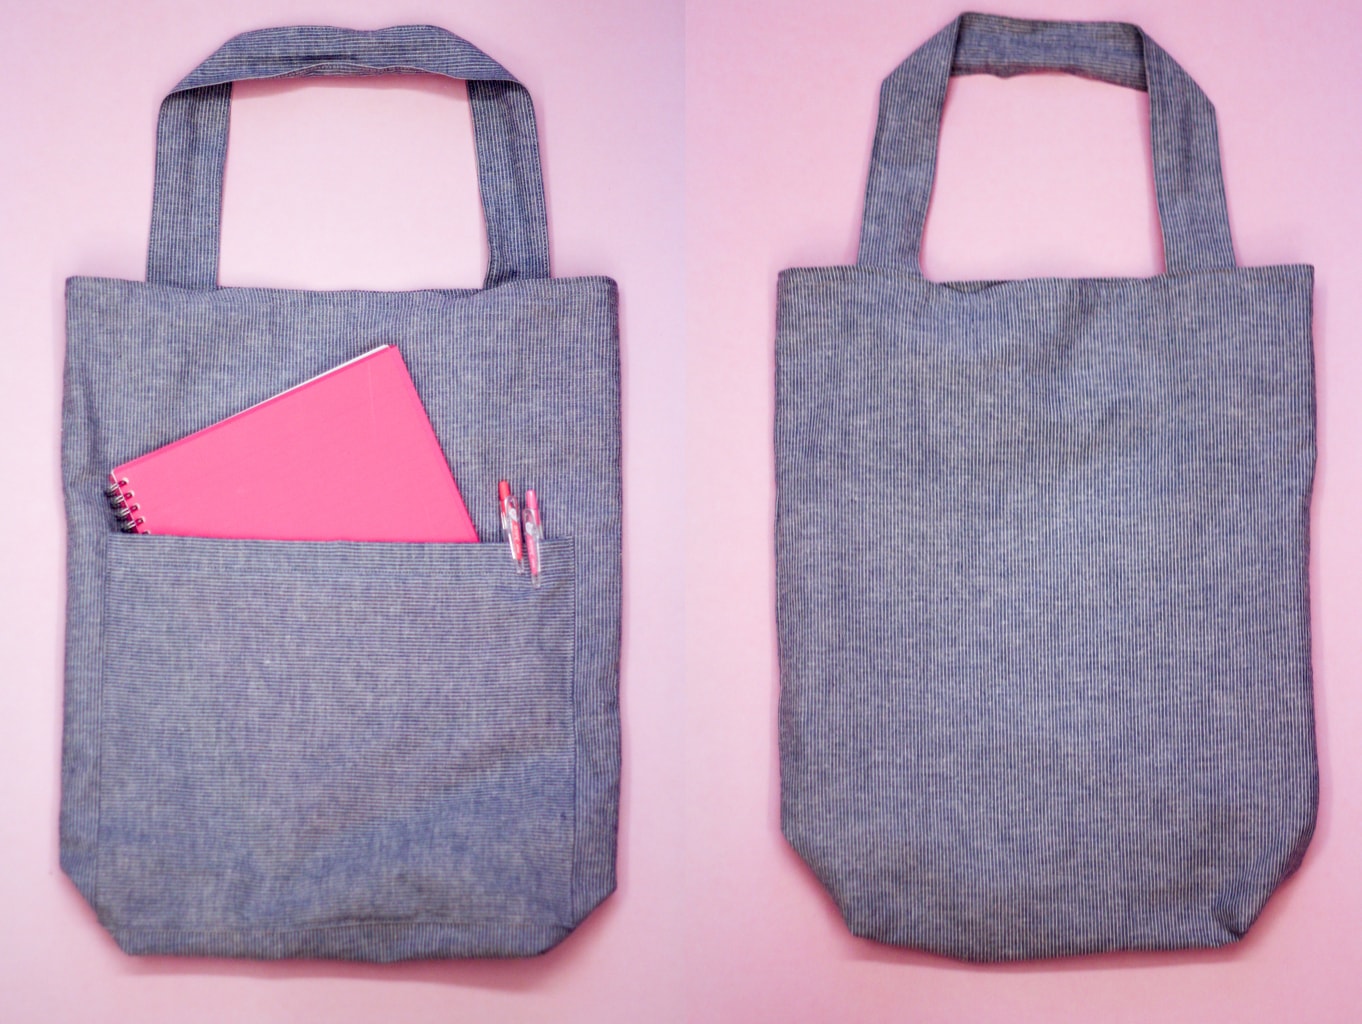 DIY a customised tote bag using this tutorial.